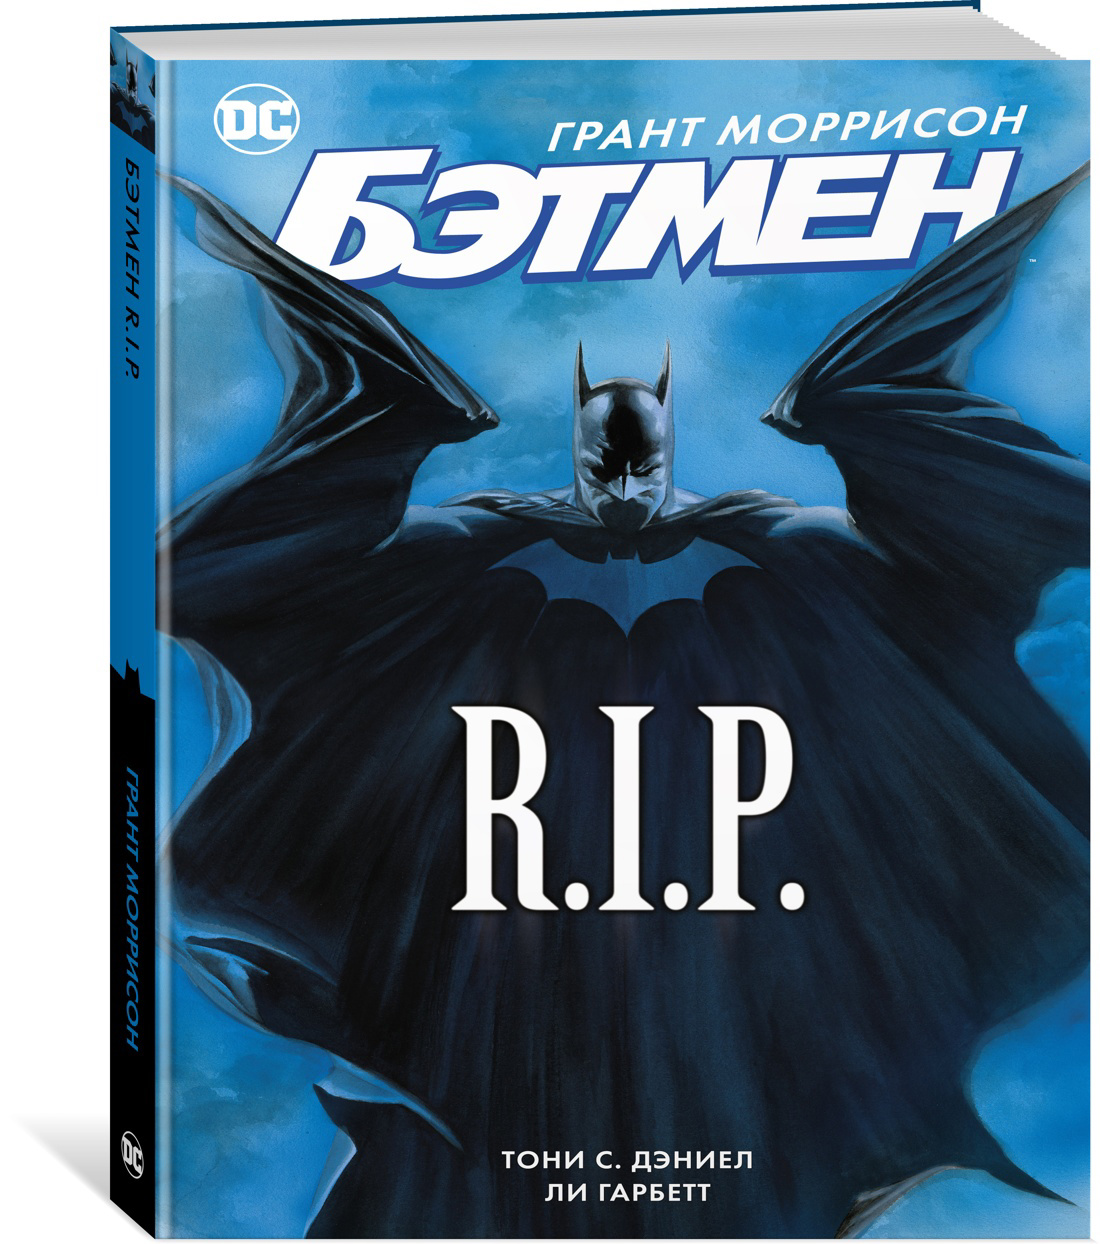 Грант Моррисон Бэтмен r.i.p. Книга Бэтмен. Бэтмен рип комикс. Книга про Бэтмена.